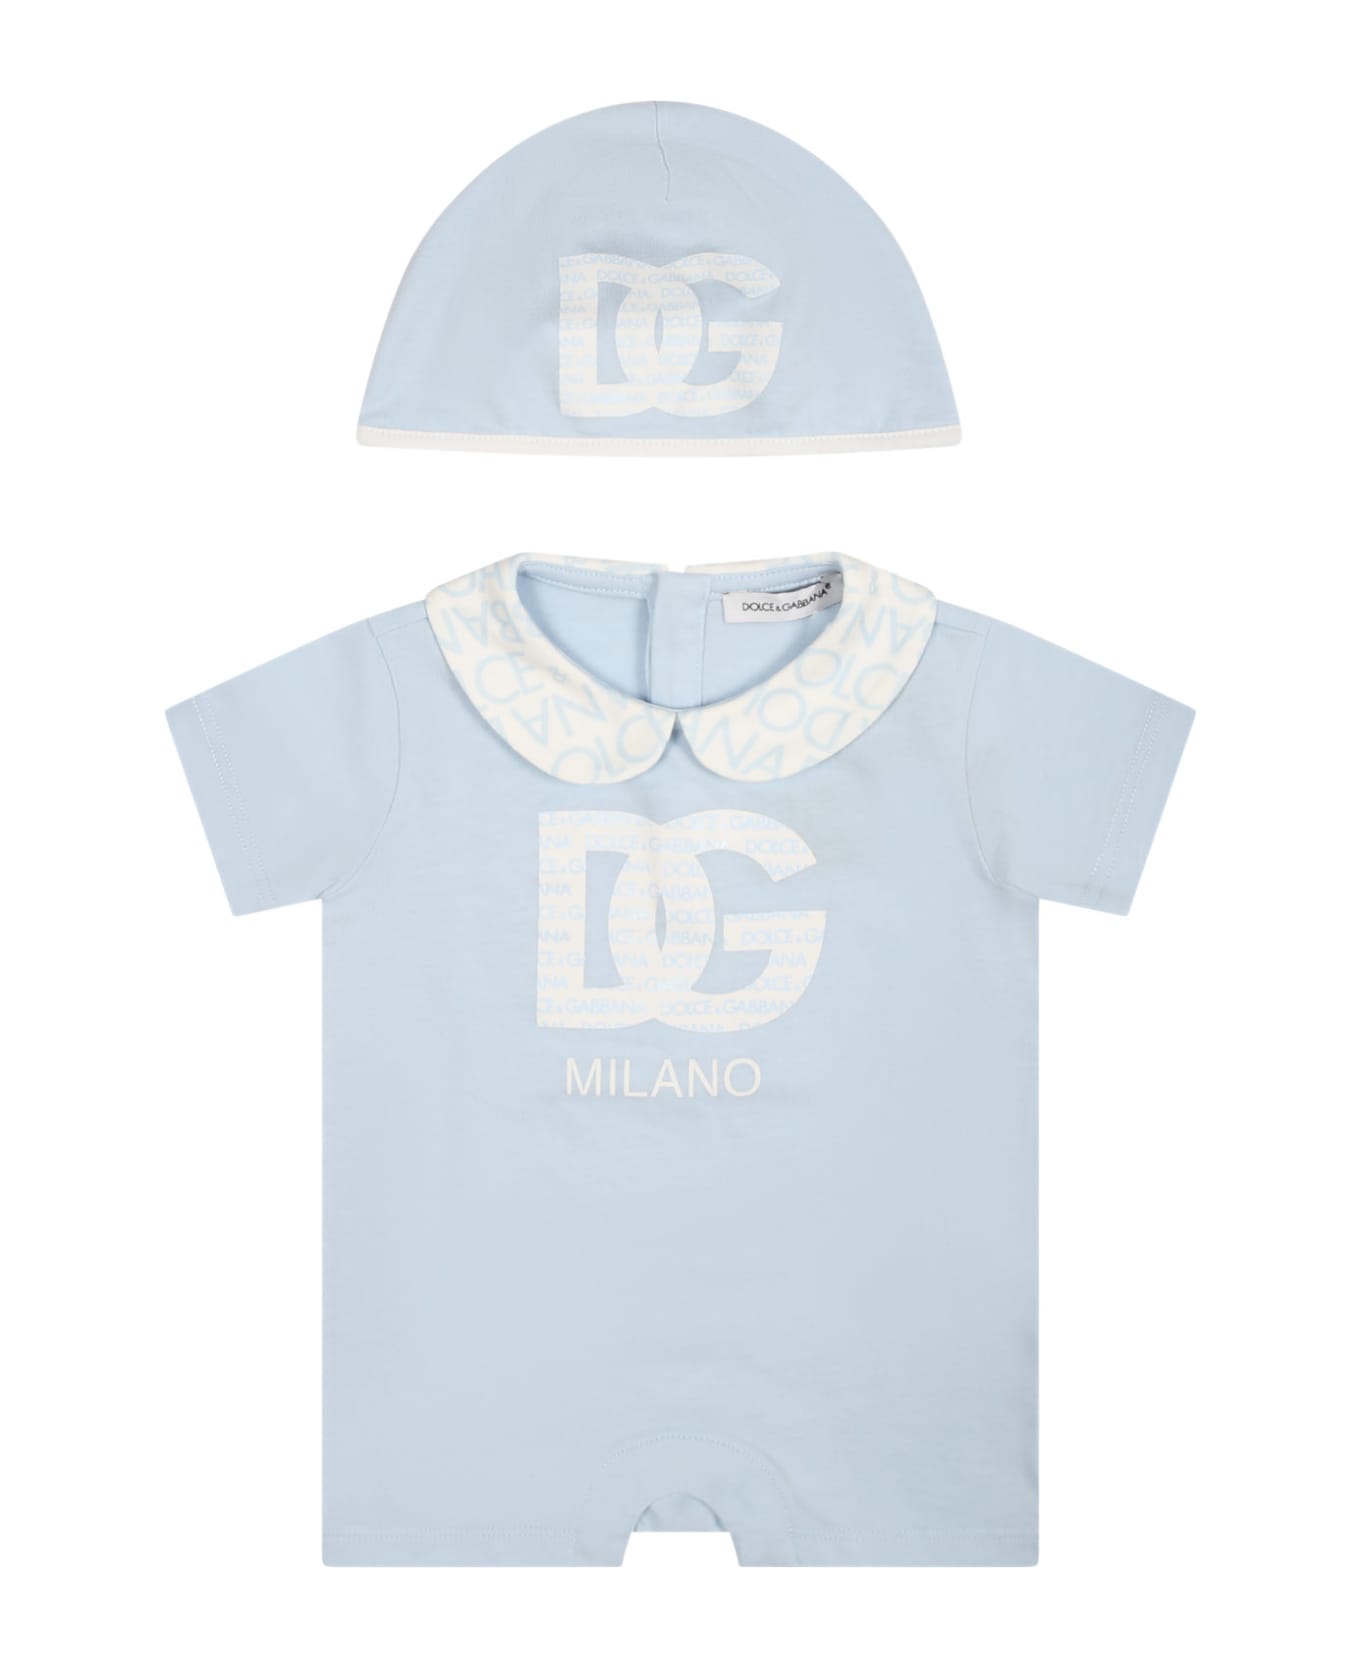 Dolce & Gabbana Light Blue Romper Suit For Baby Boy With Logo - Light Blue